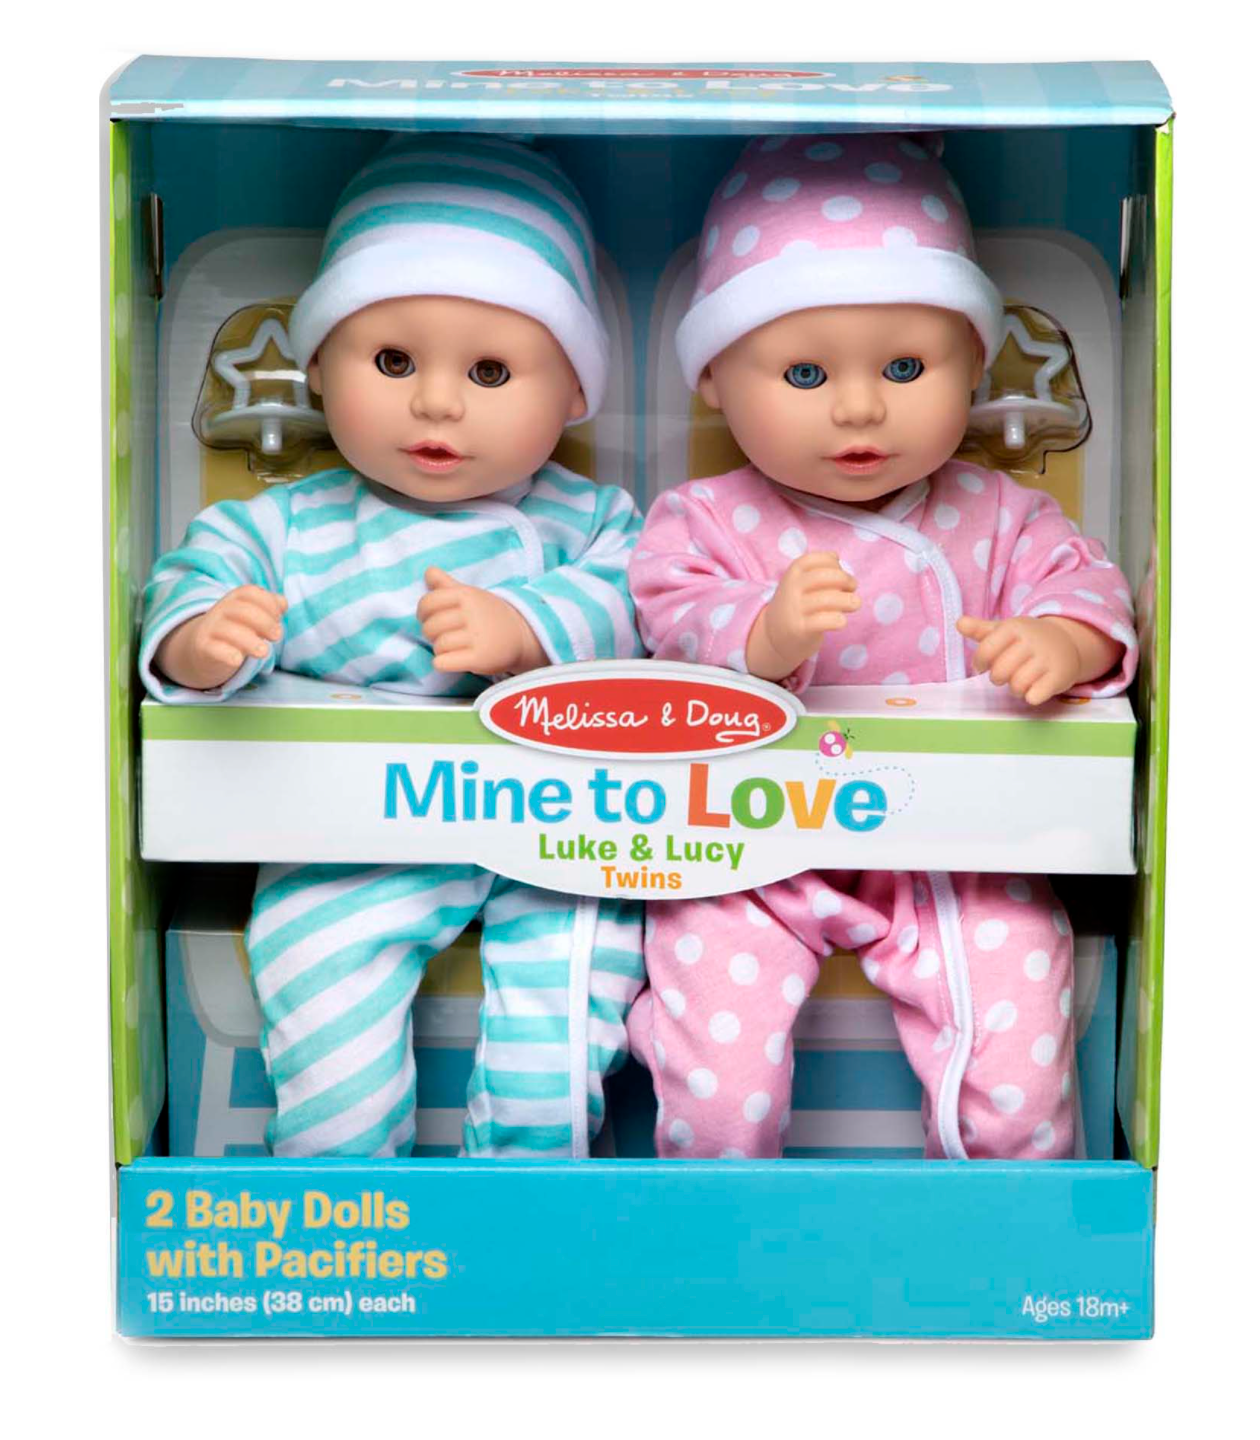 Mine to Love: Twins - Luke & Lucy